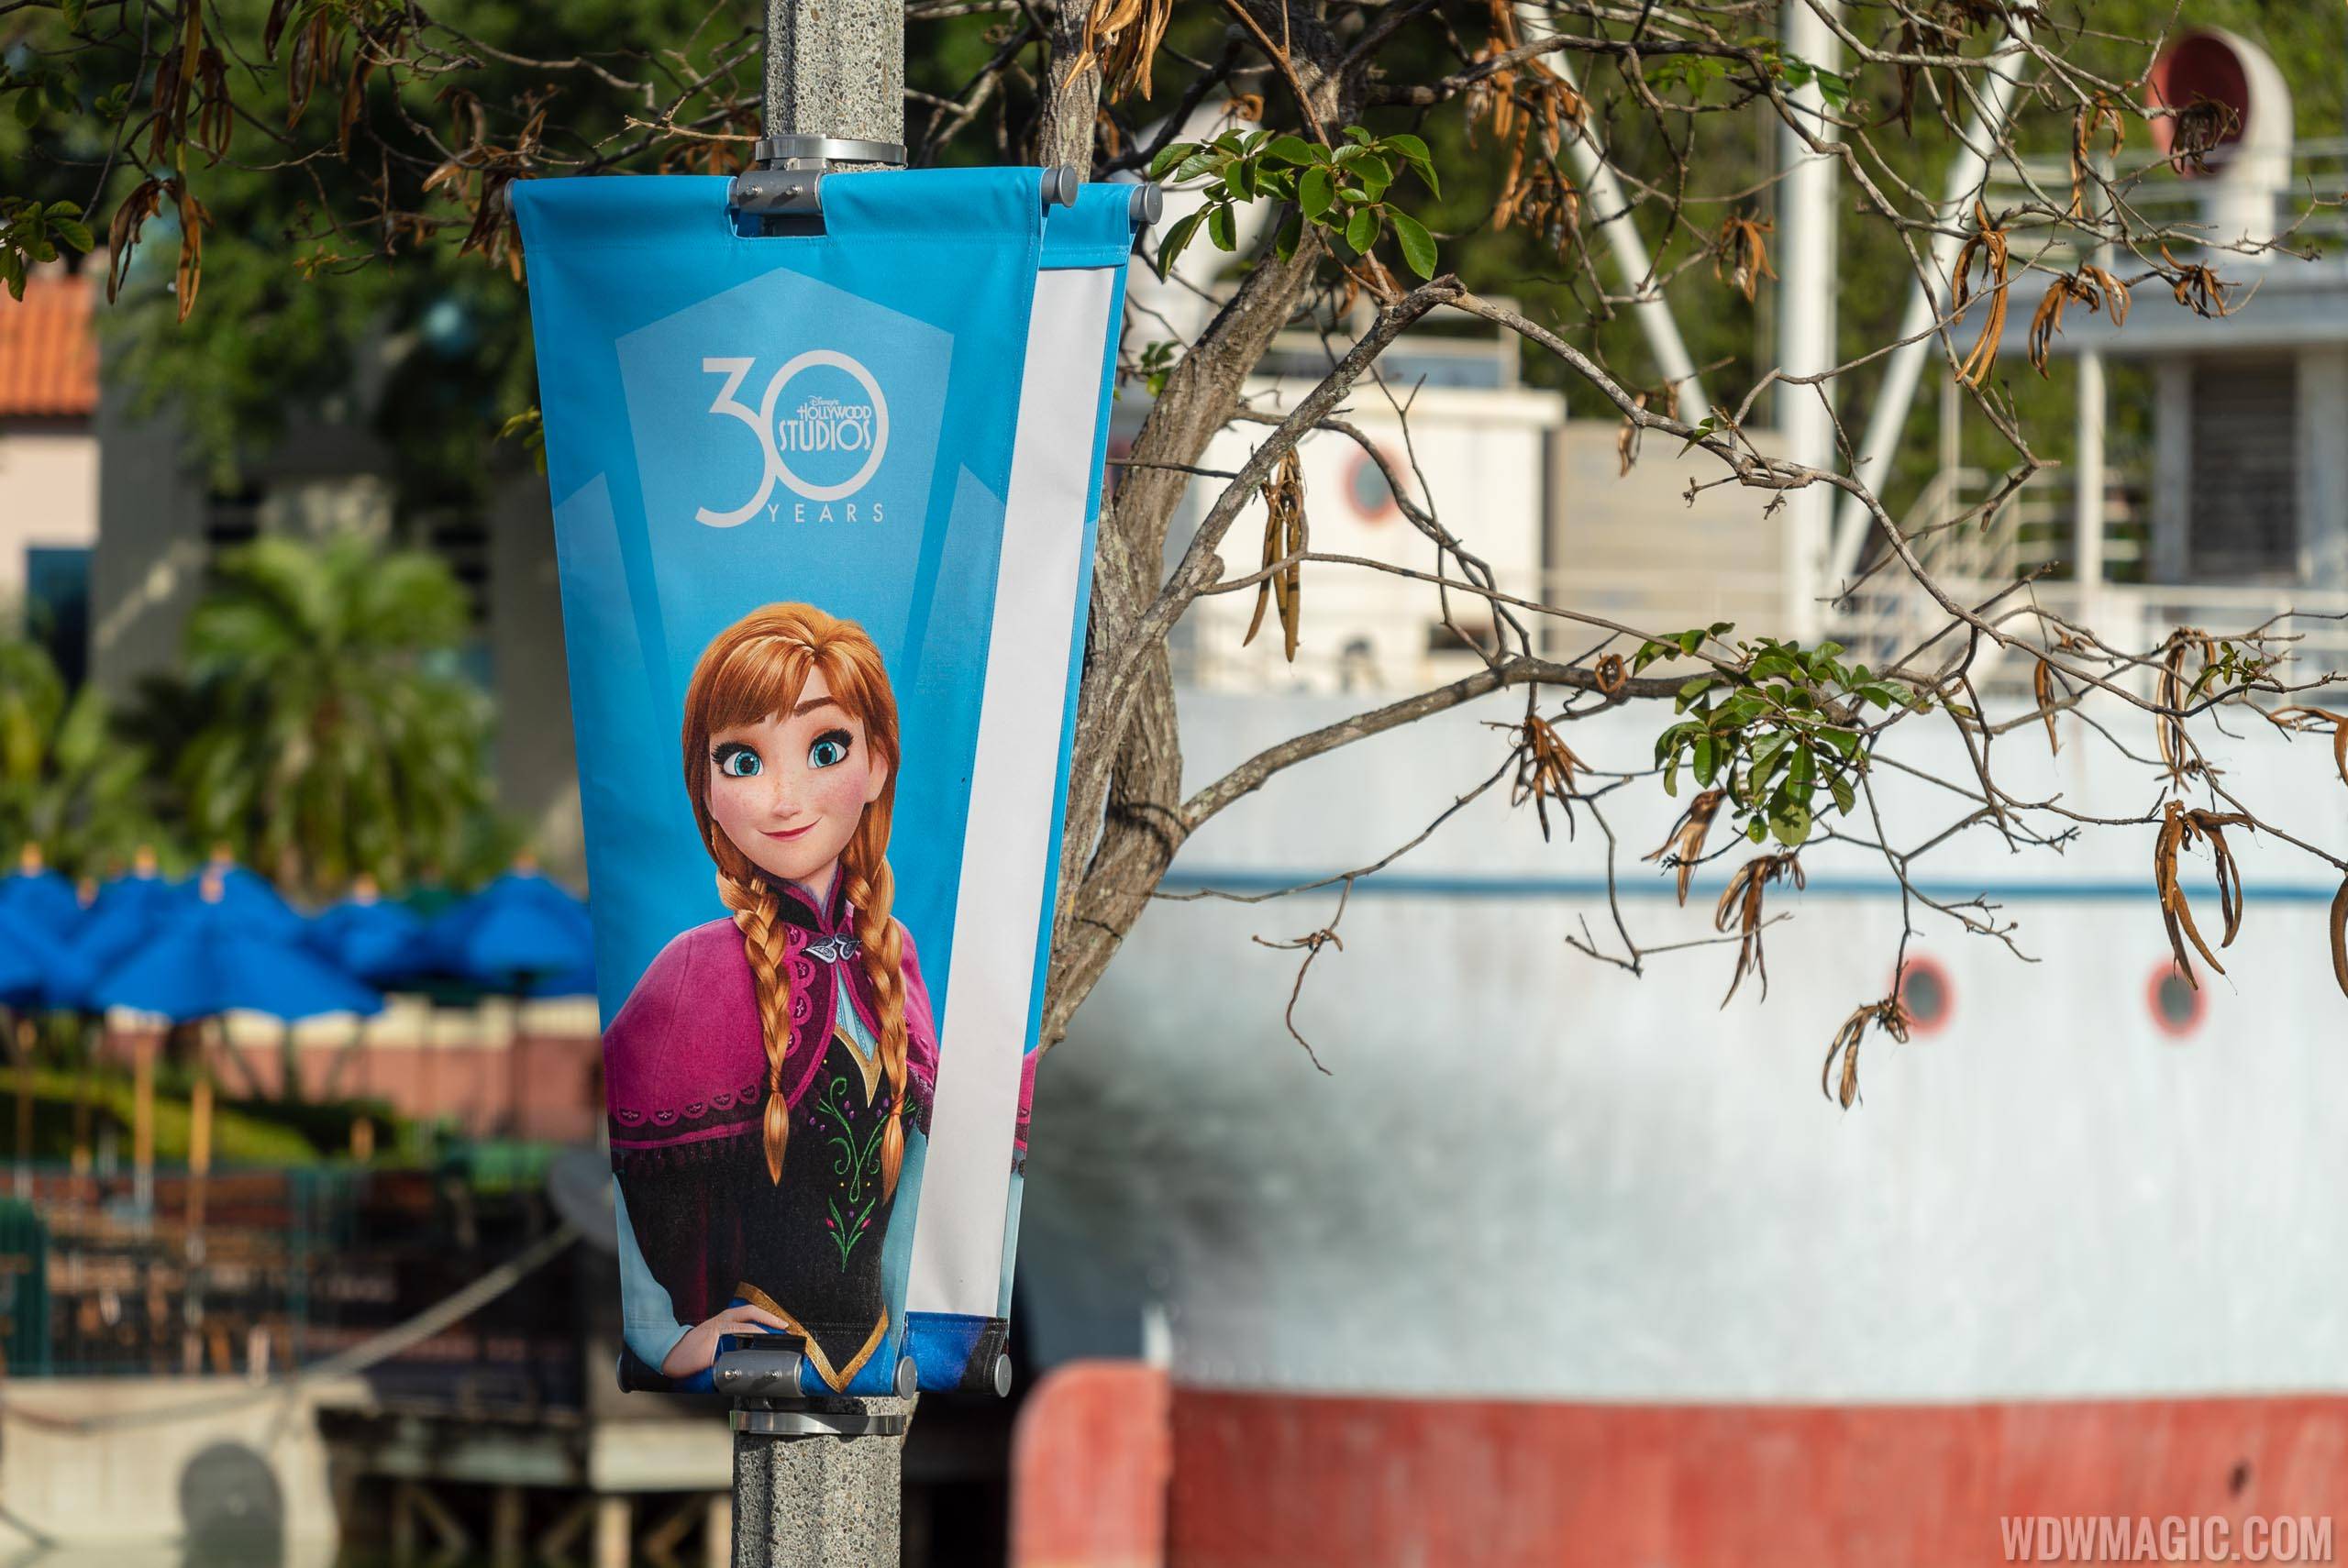 Disney's Hollywood Studios 30th Anniversary banners